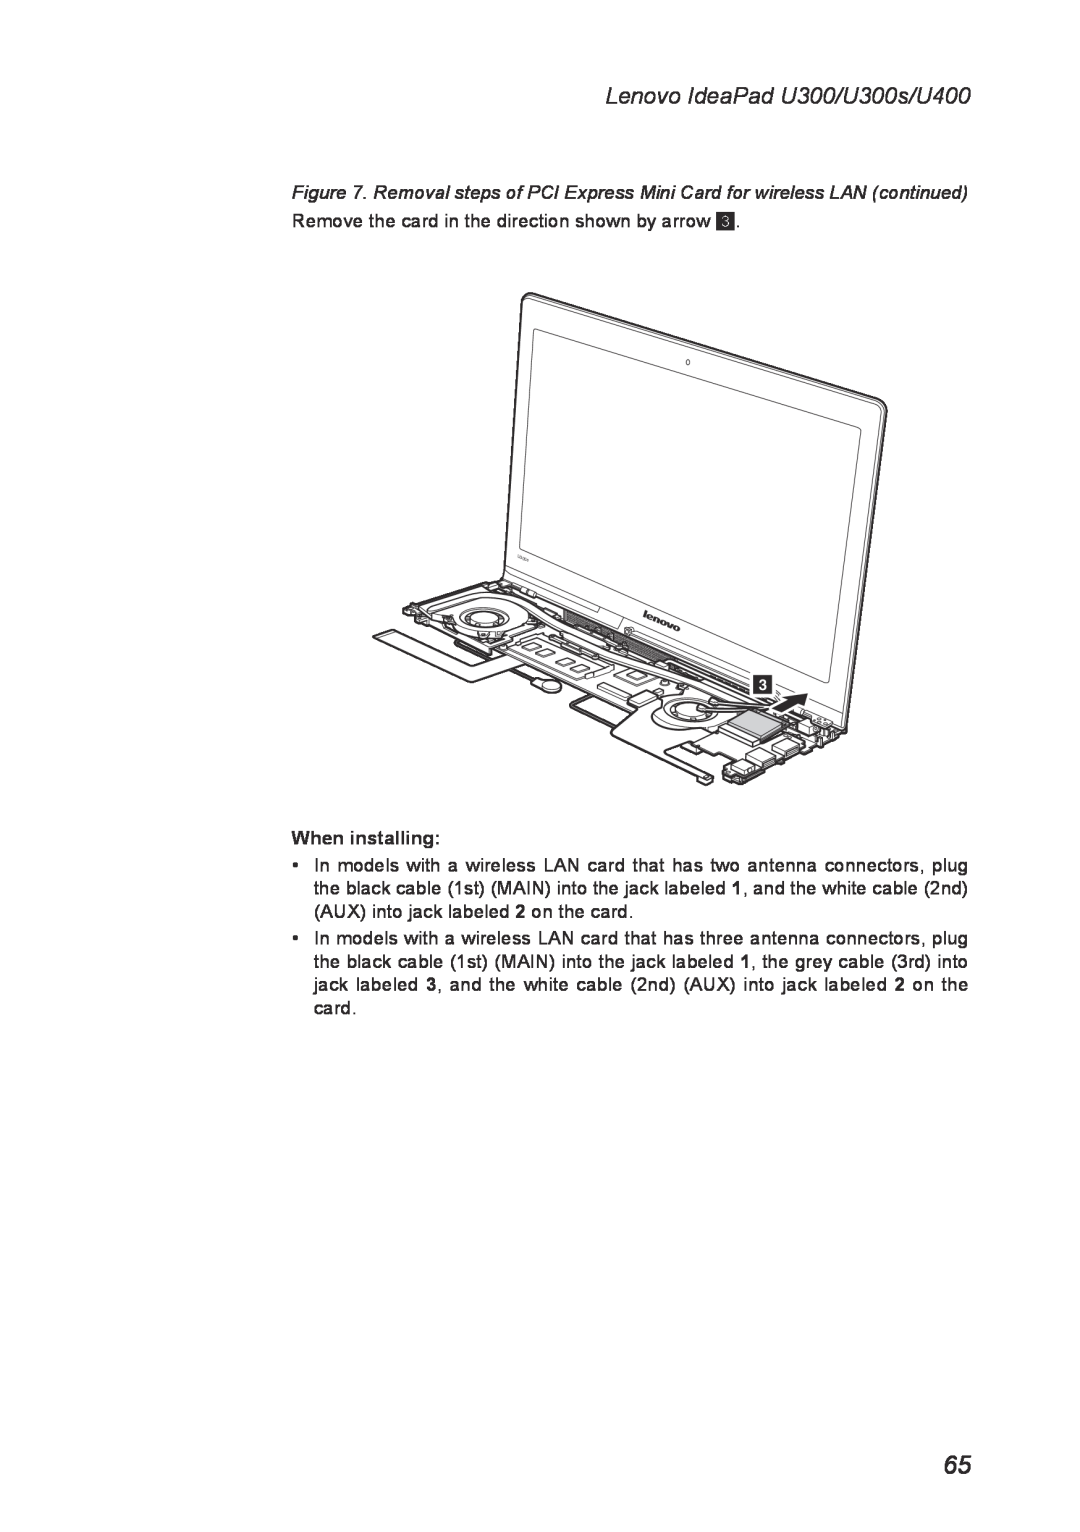 Lenovo U300S manual Lenovo IdeaPad U300/U300s/U400, When installing 